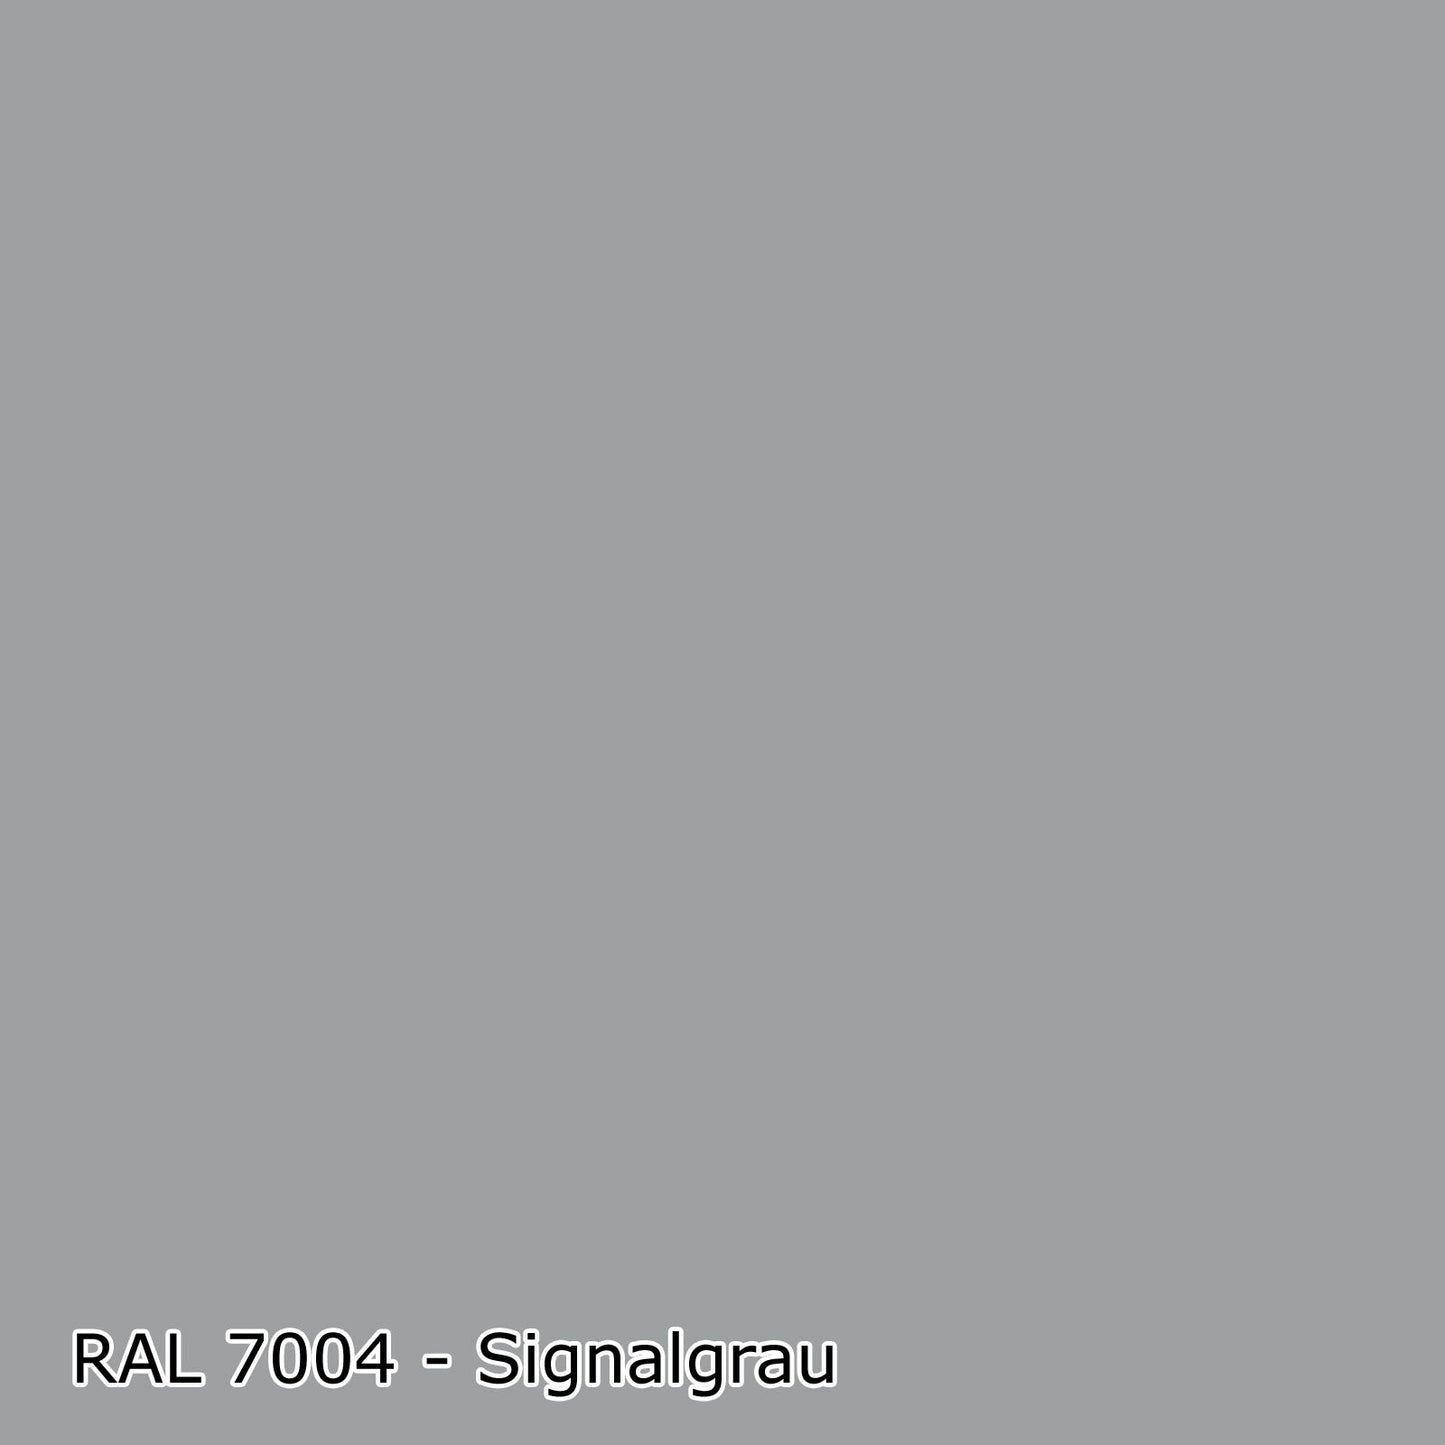 2,5 L Buntlack, Kunstharzlack RAL Farbwahl - SEIDENMATT (RAL 6008 - 9018)